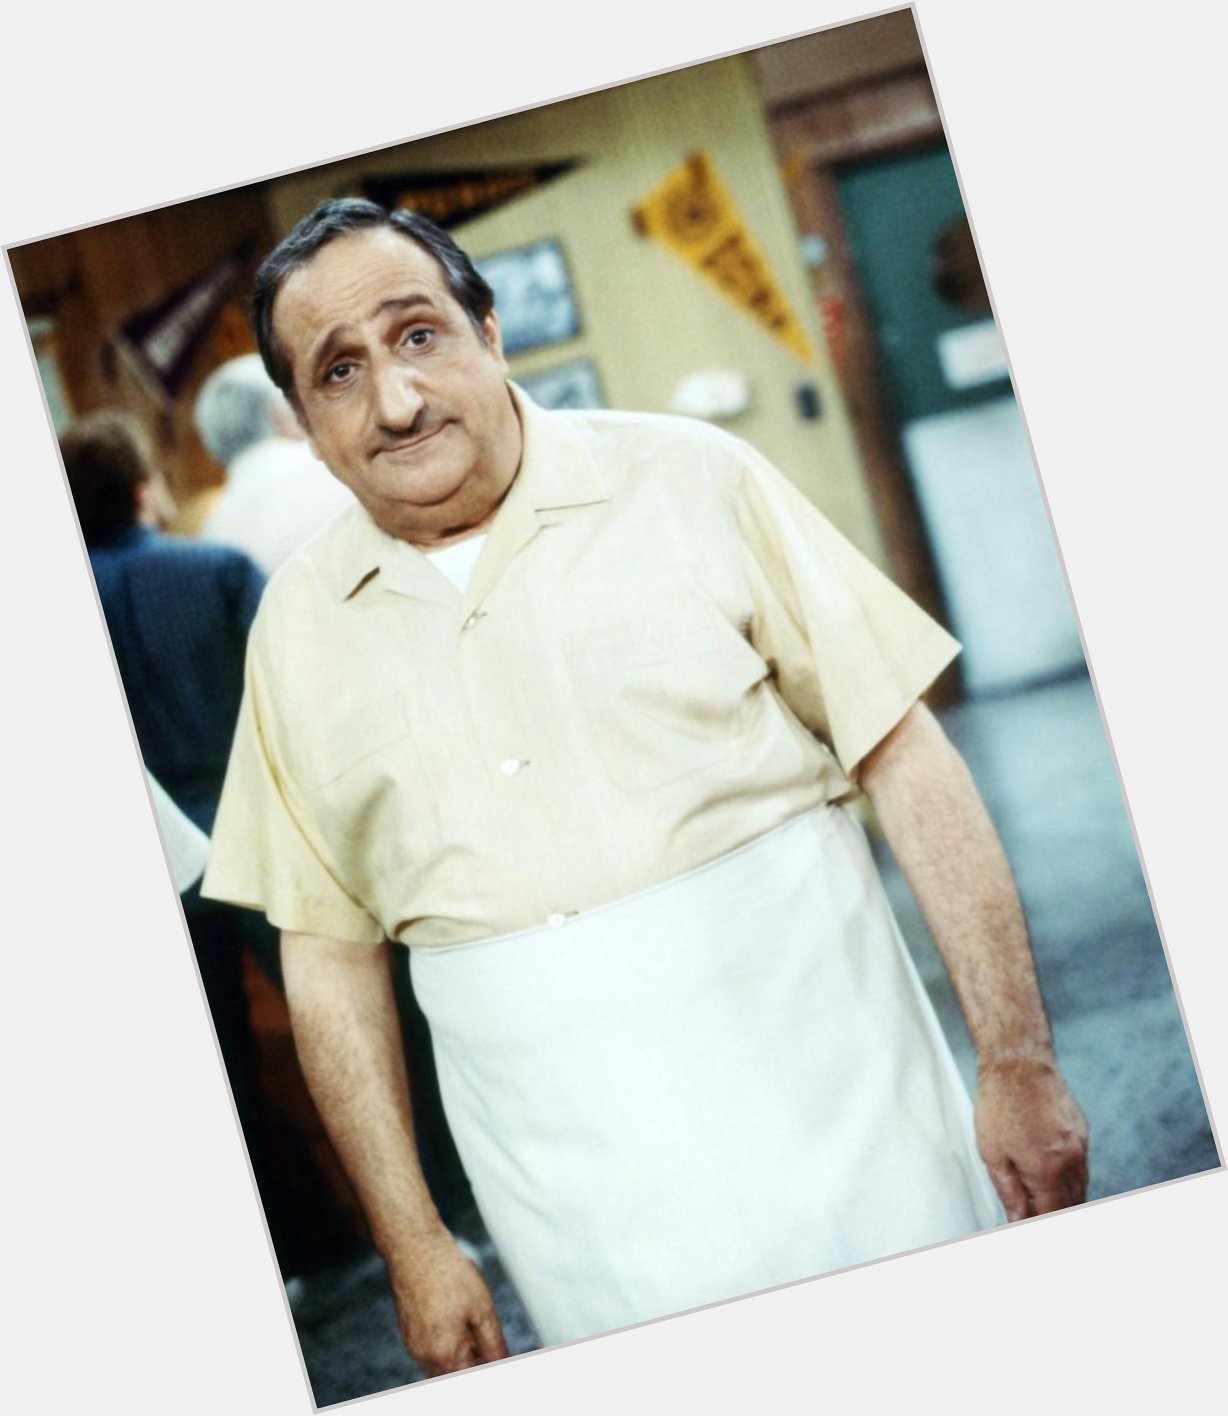 Al Molinaro, Big Al on Happy Days,\ dies at 96 on Henry Winkler\s 70th bday. OBIT-->   